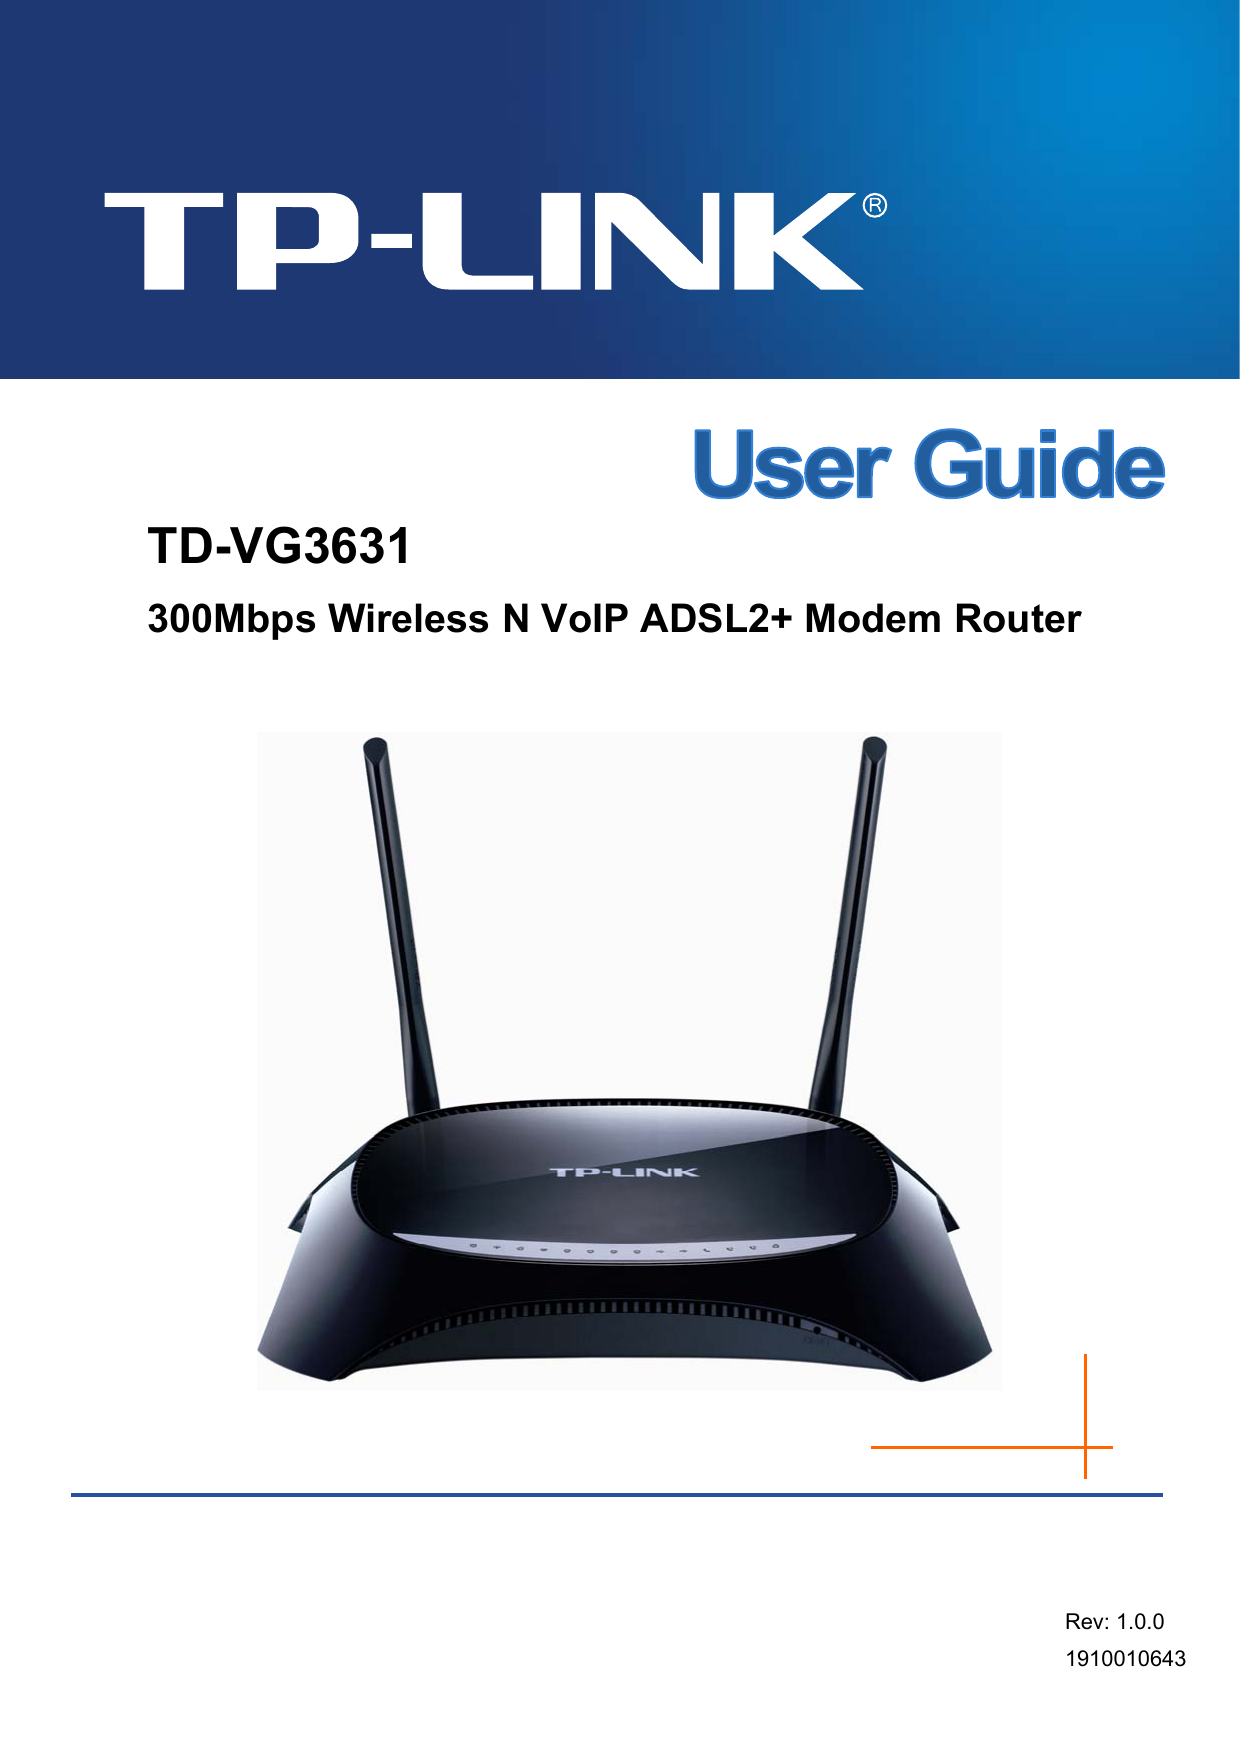   TD-VG3631 300Mbps Wireless N VoIP ADSL2+ Modem Router 1910010643 Rev: 1.0.0  